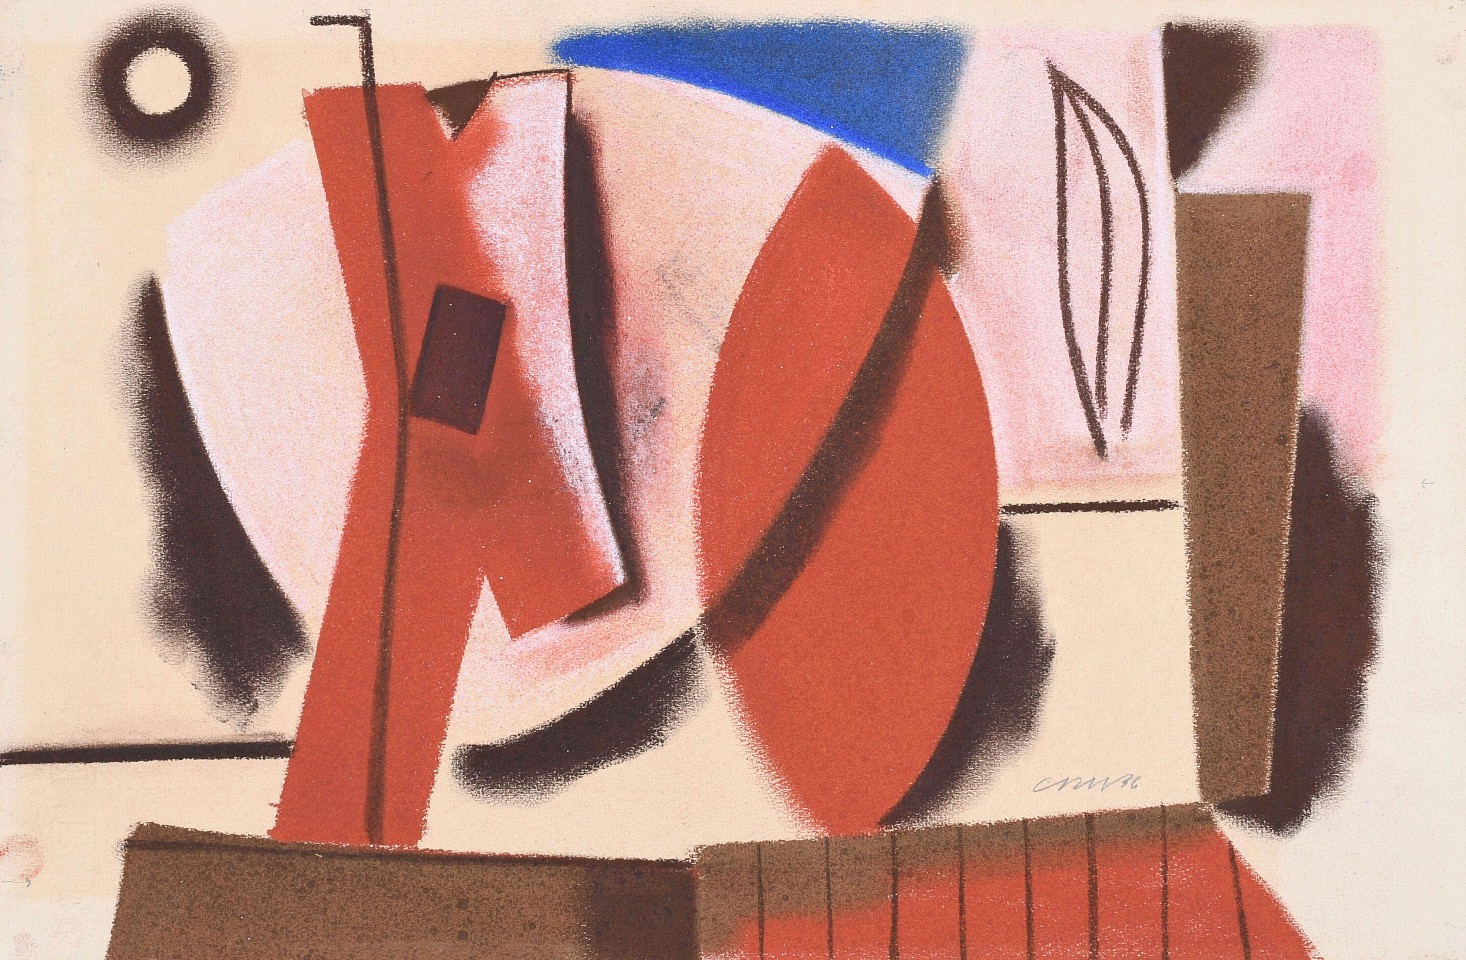 Carl Robert Holty, Untitled, 1936
Gouache on artist board, 12 x 17 in.
HOL003